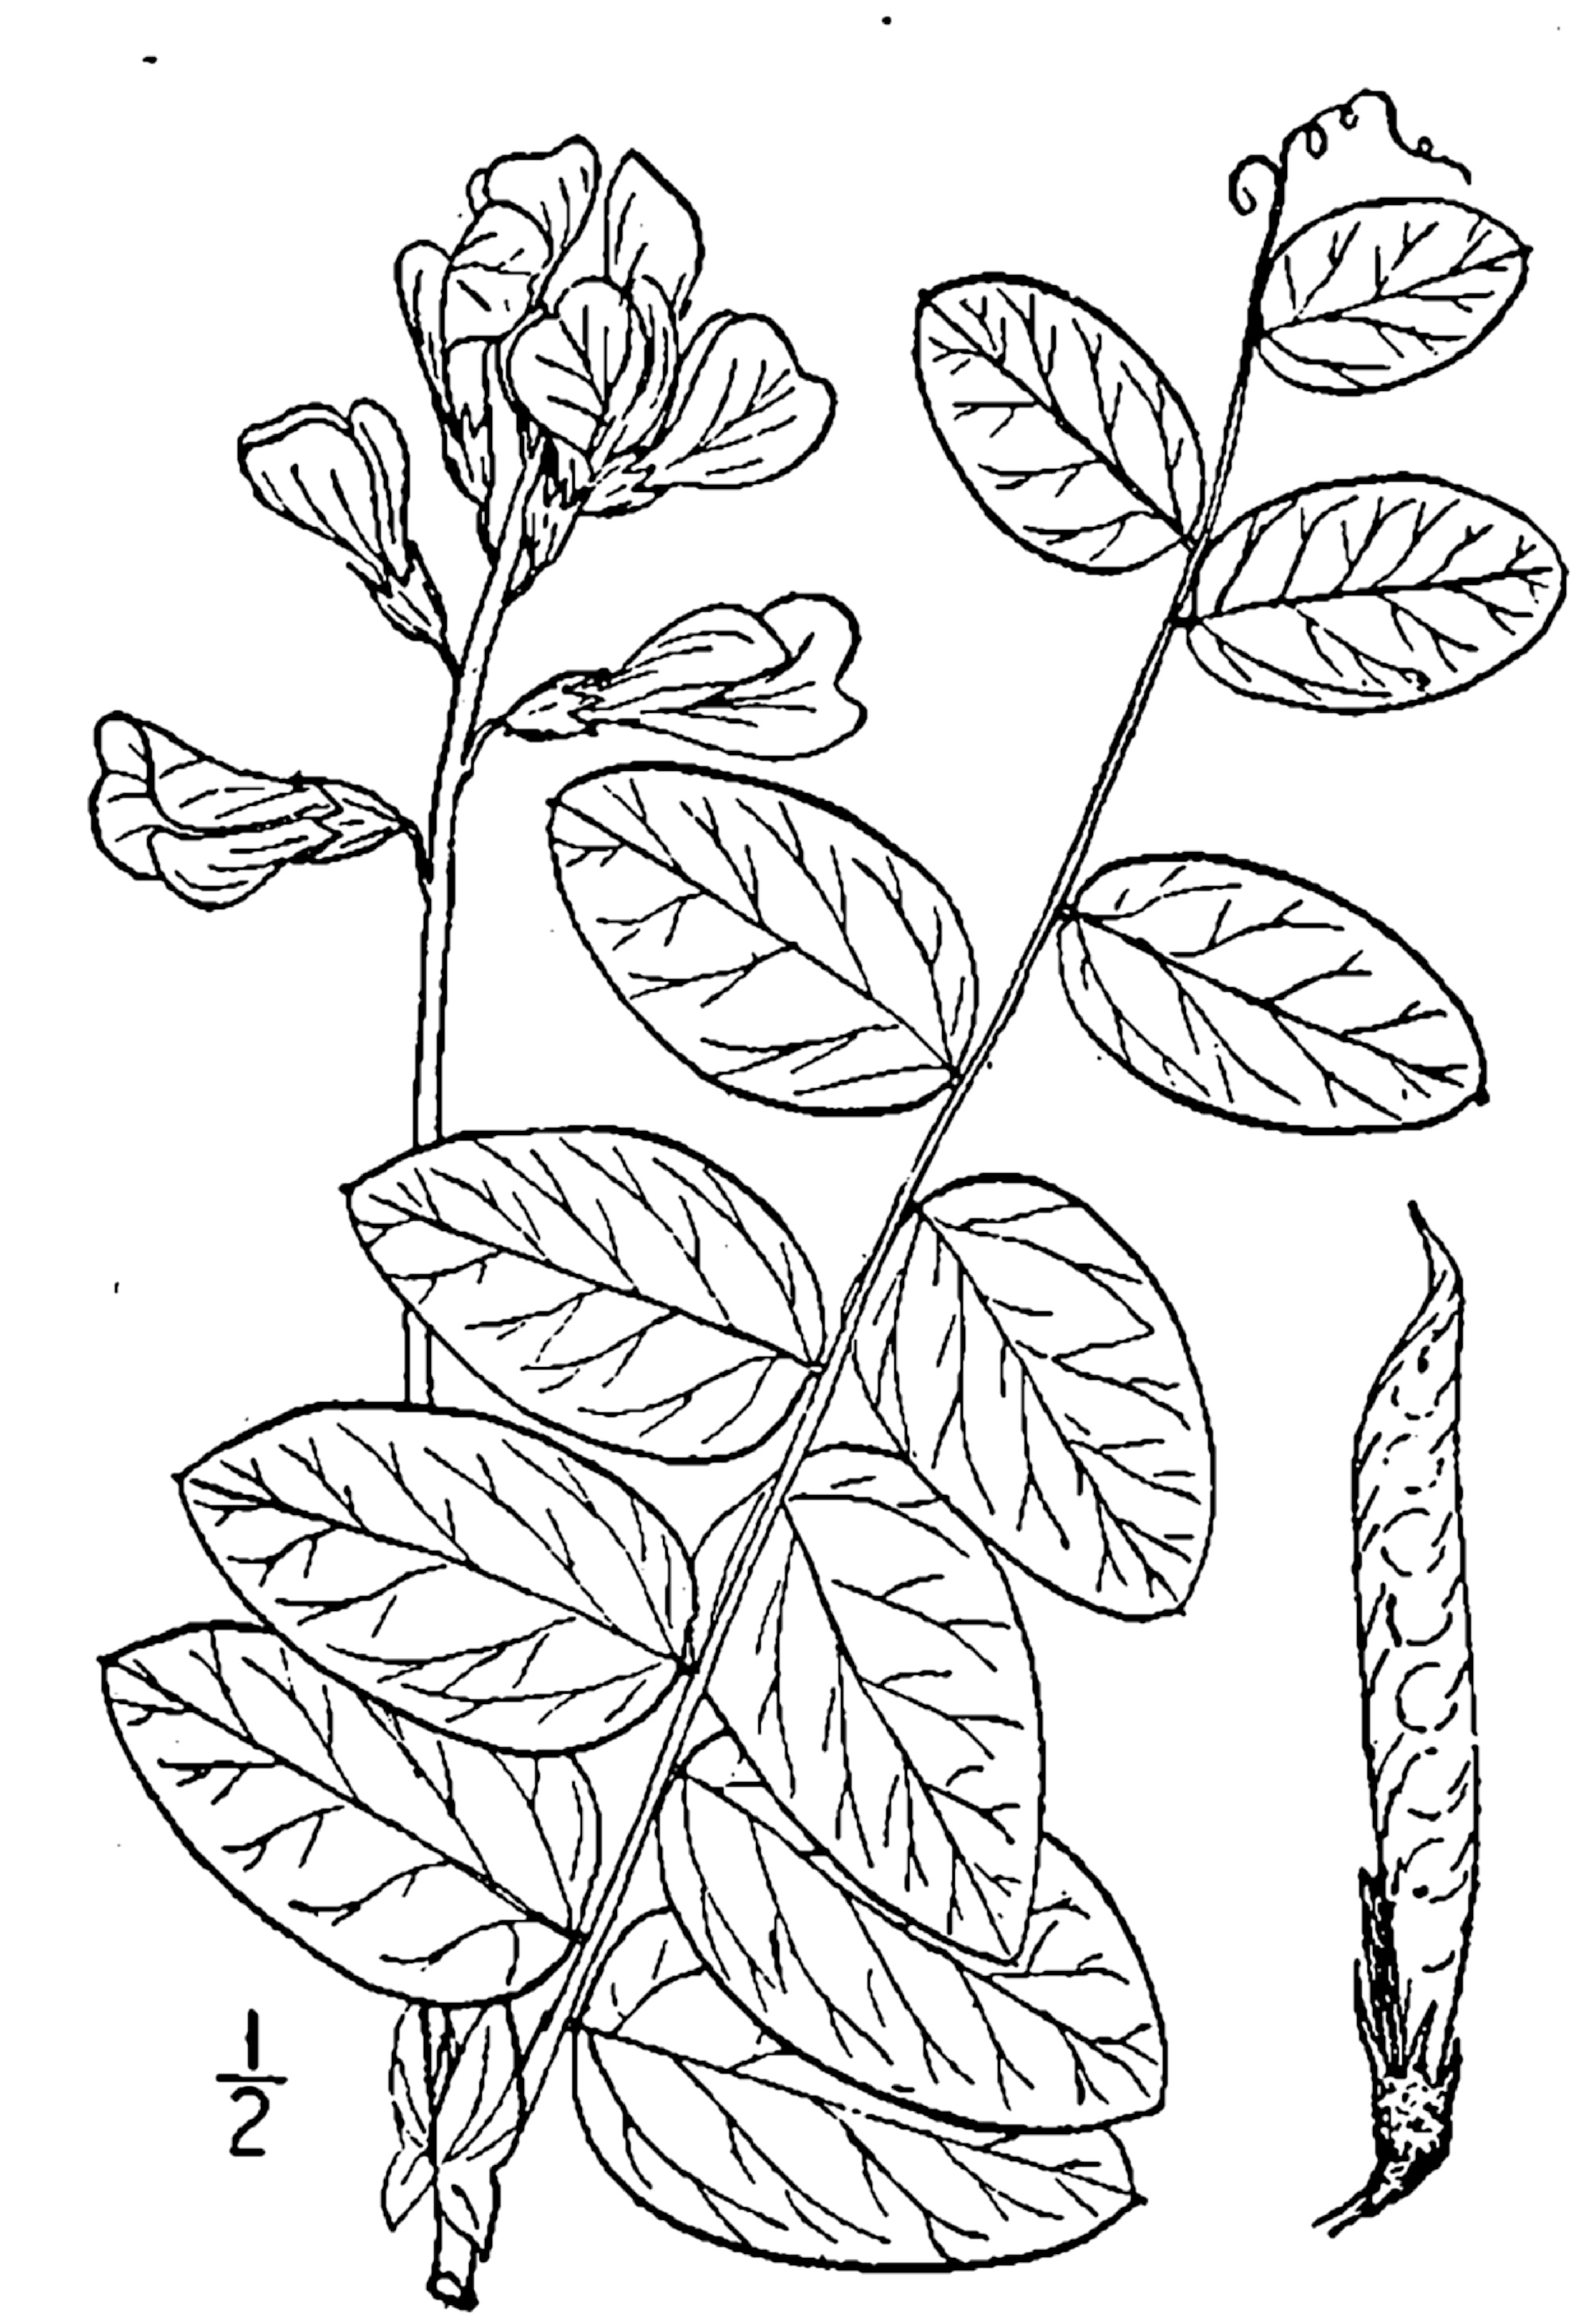 1913 line drawing of Lathyrus venosus.